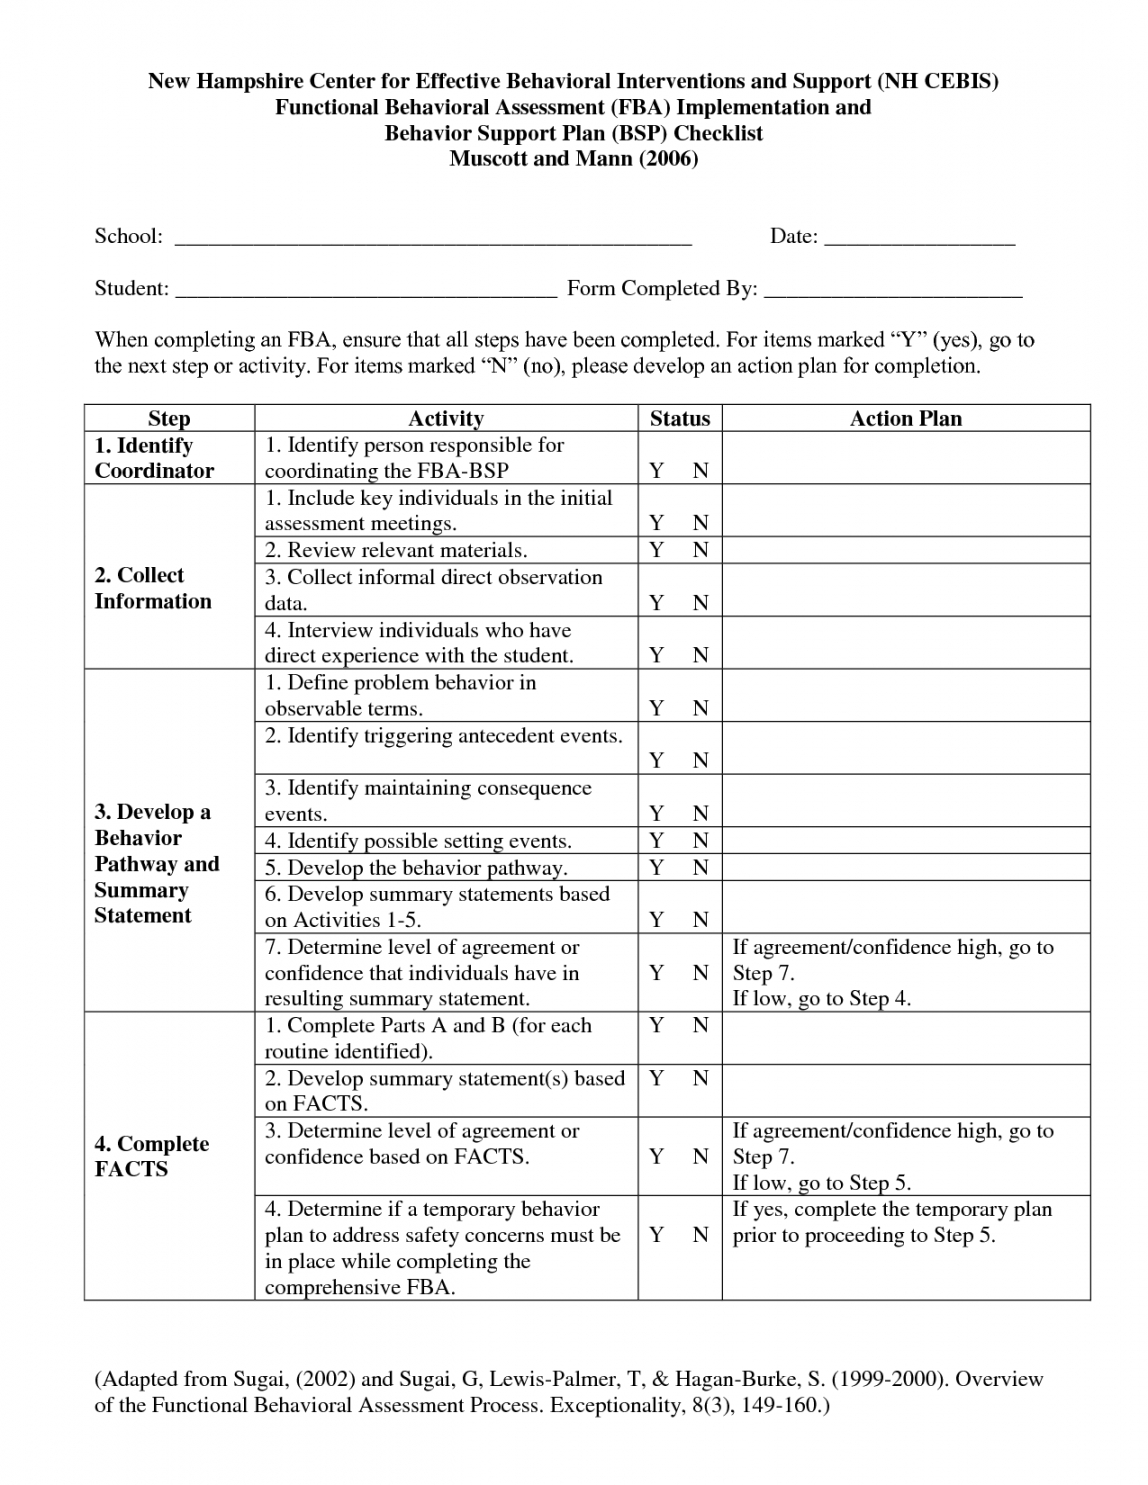 free functional behavior plan template  functional behavioral assessment functional behavior assessment checklist template